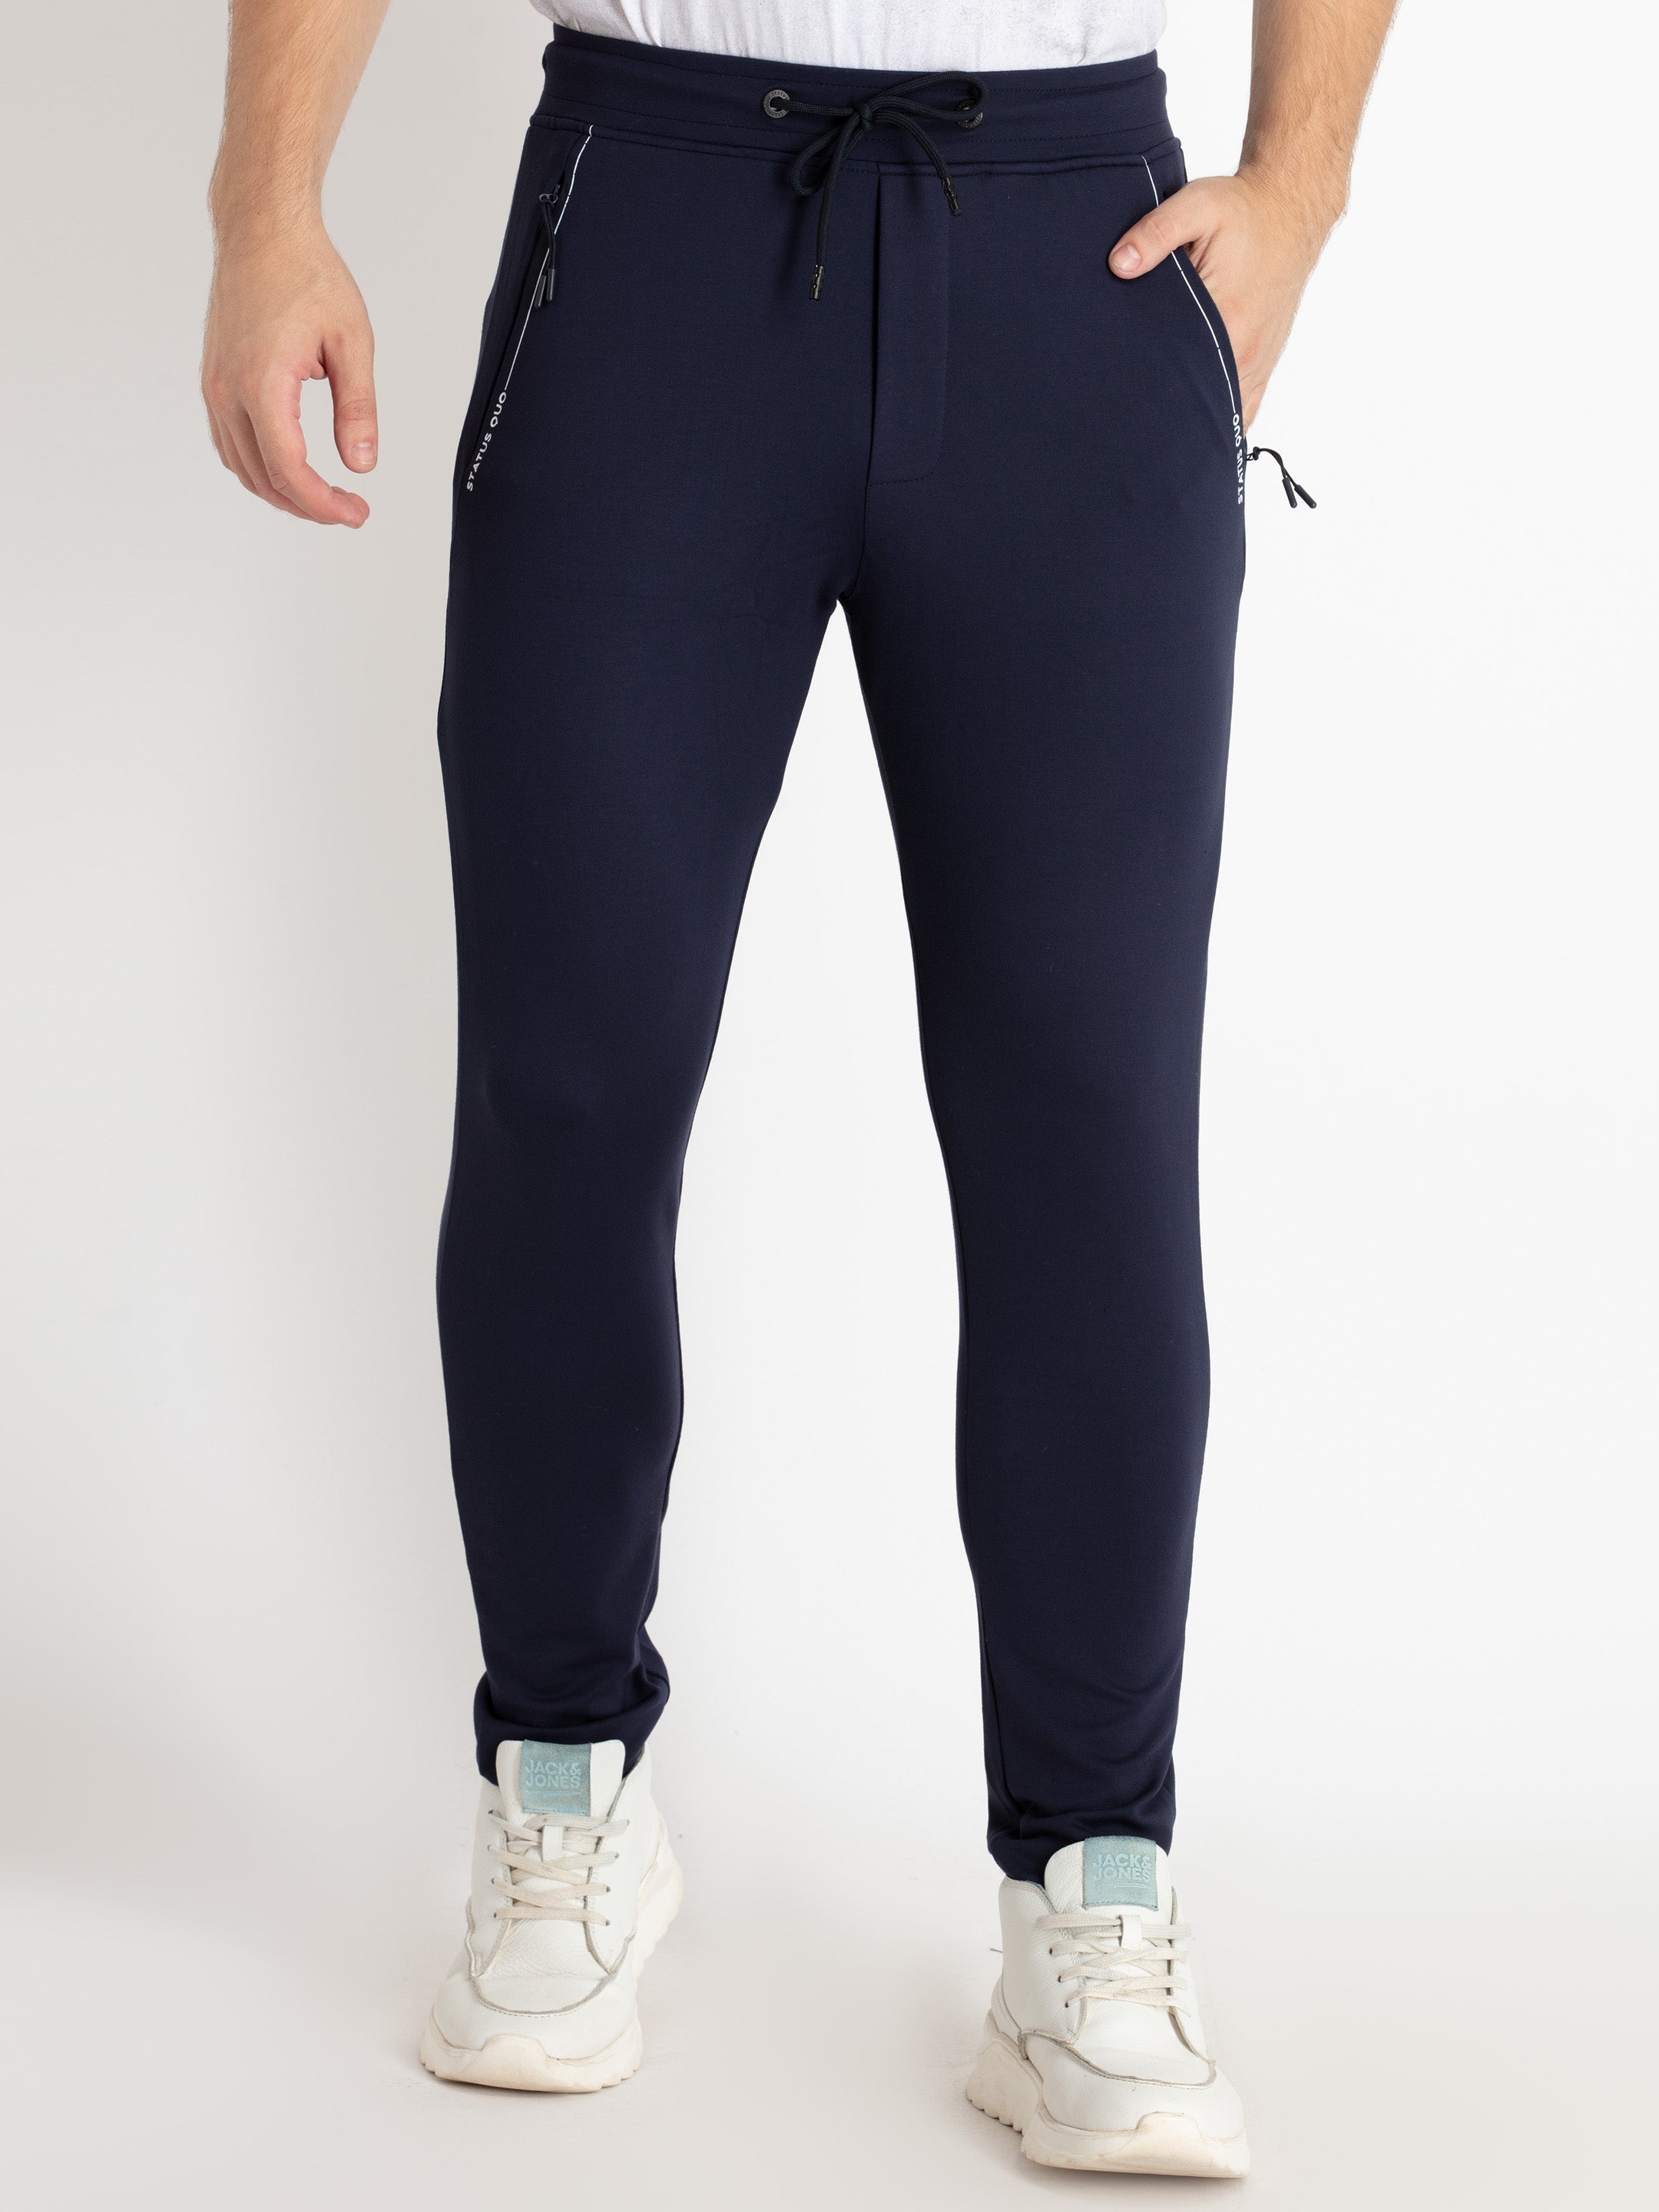 Men's Sweatpants w/ Pockets Jogger Athletic Track Pants for Running Workout  Gym | eBay